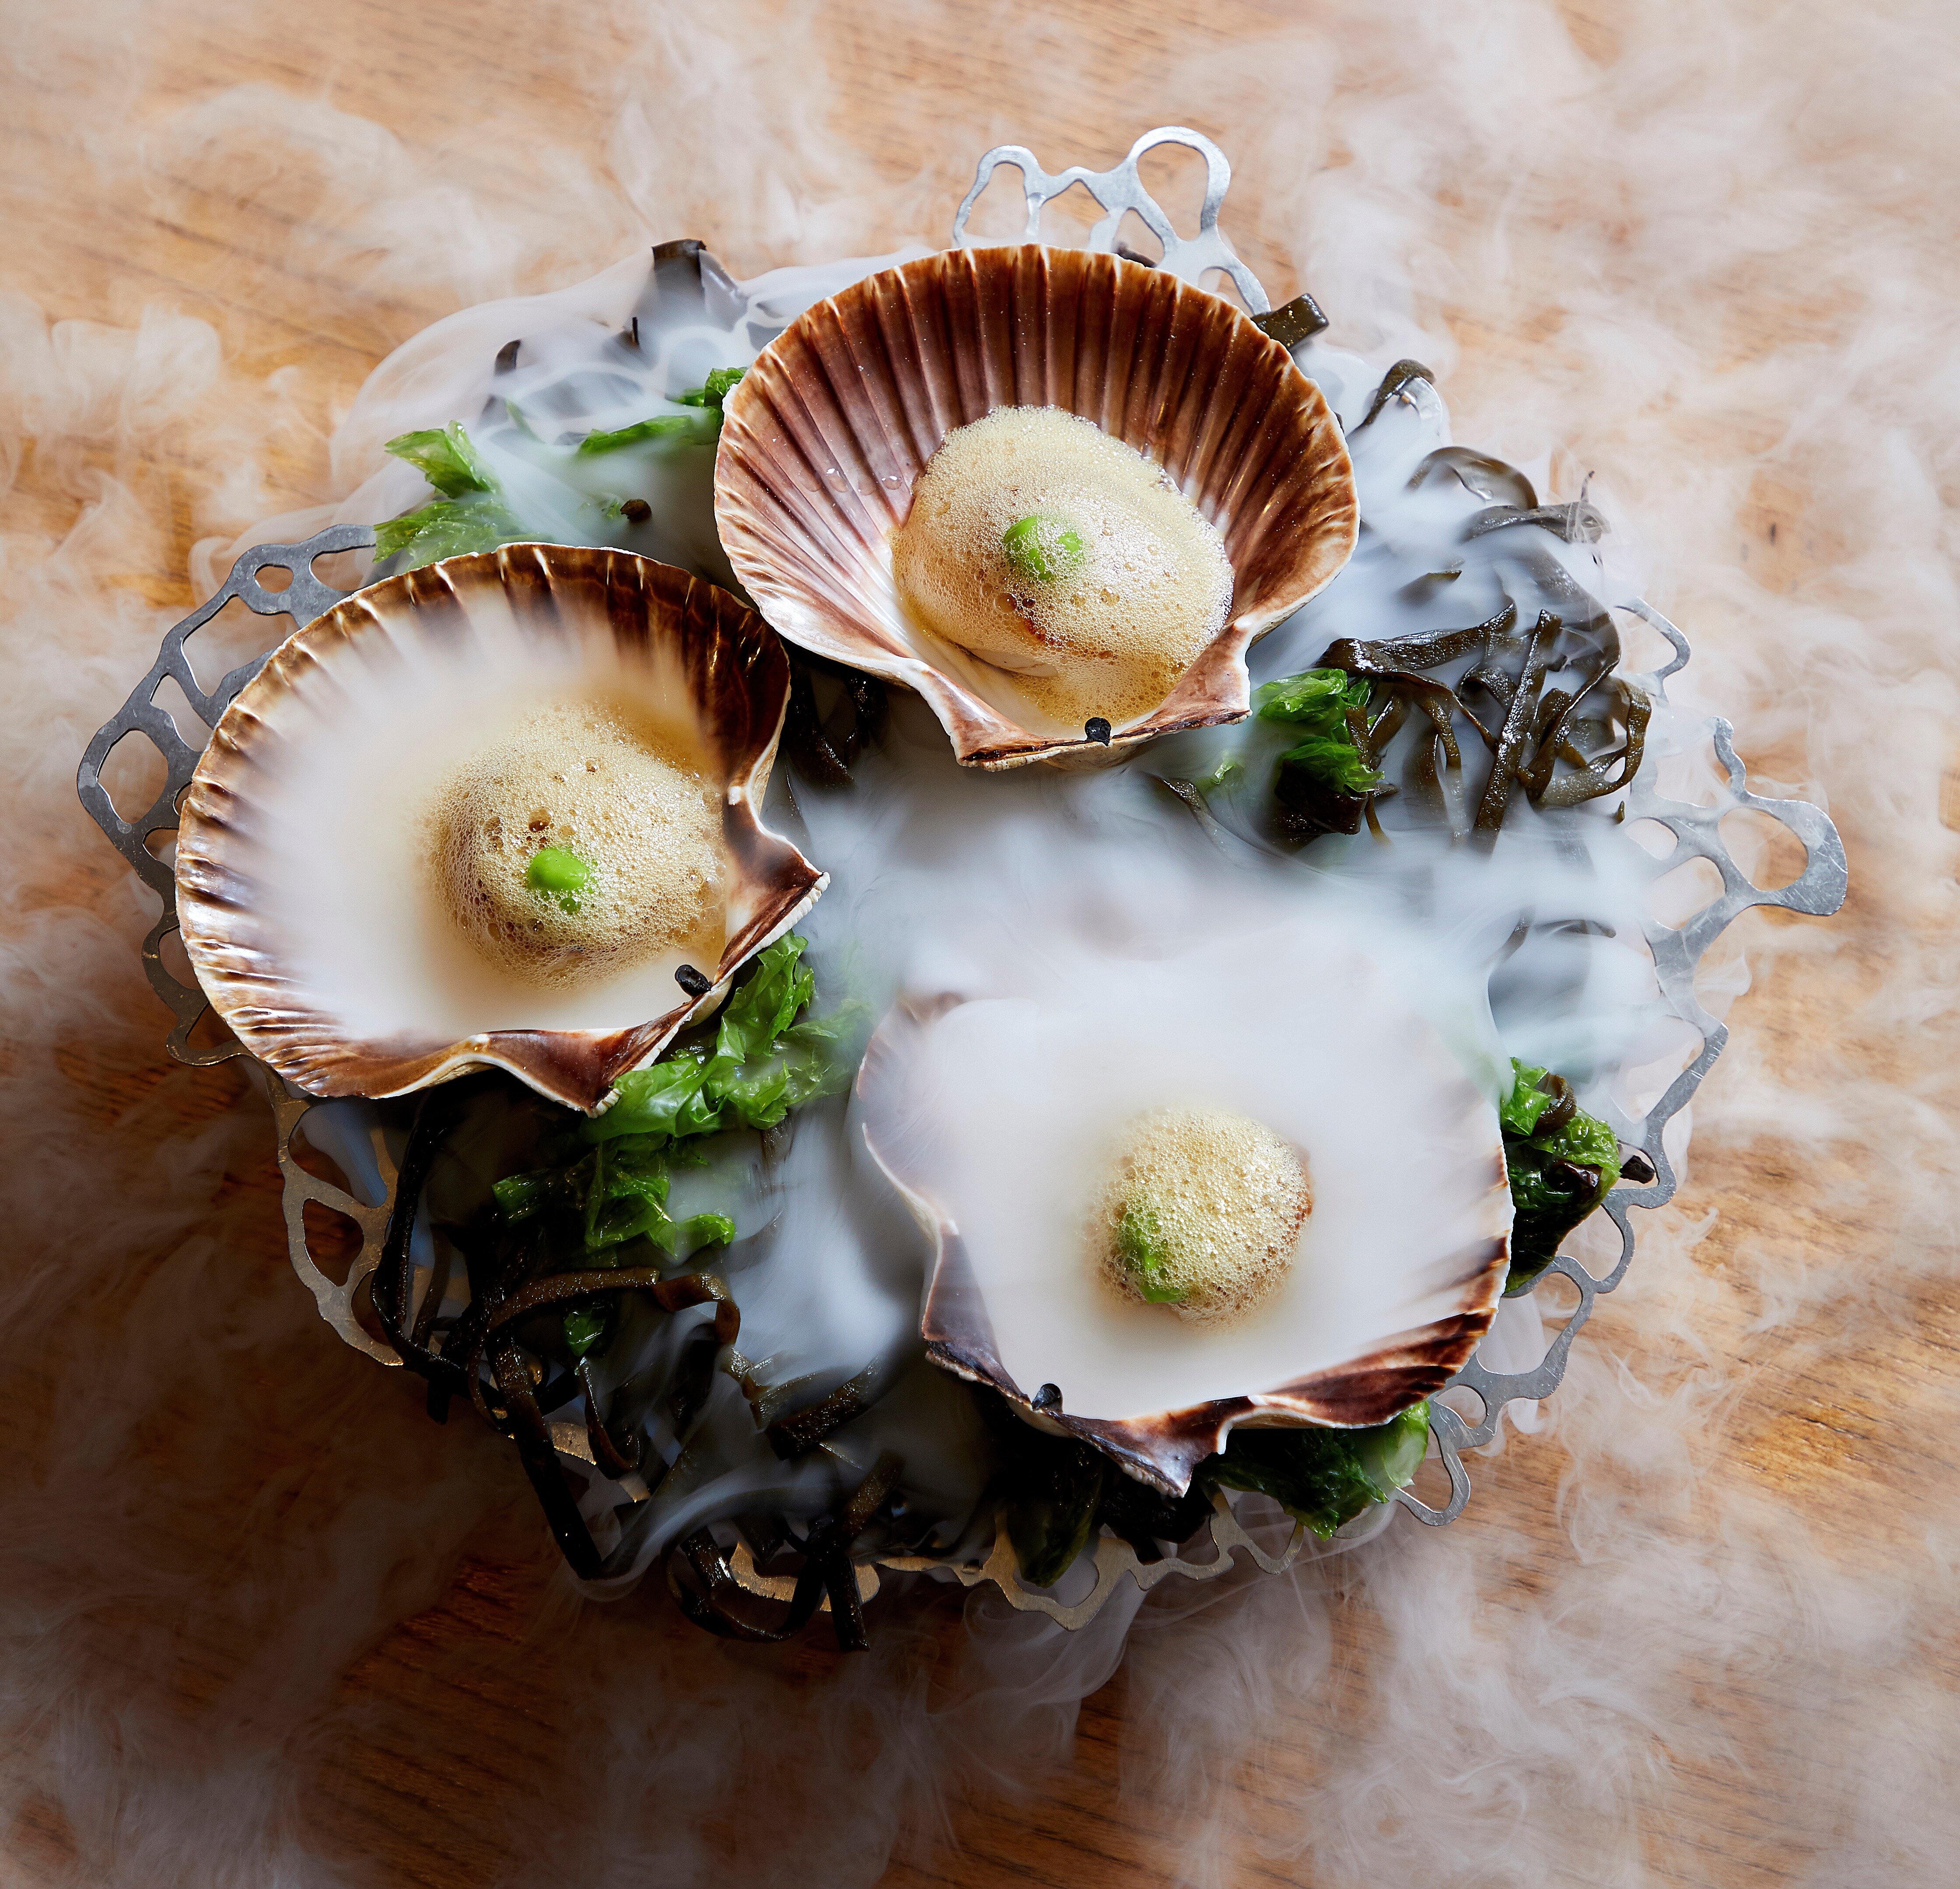 Chef masterclass: ‘Bay of Biscay’ scallops by Eneko Atxa